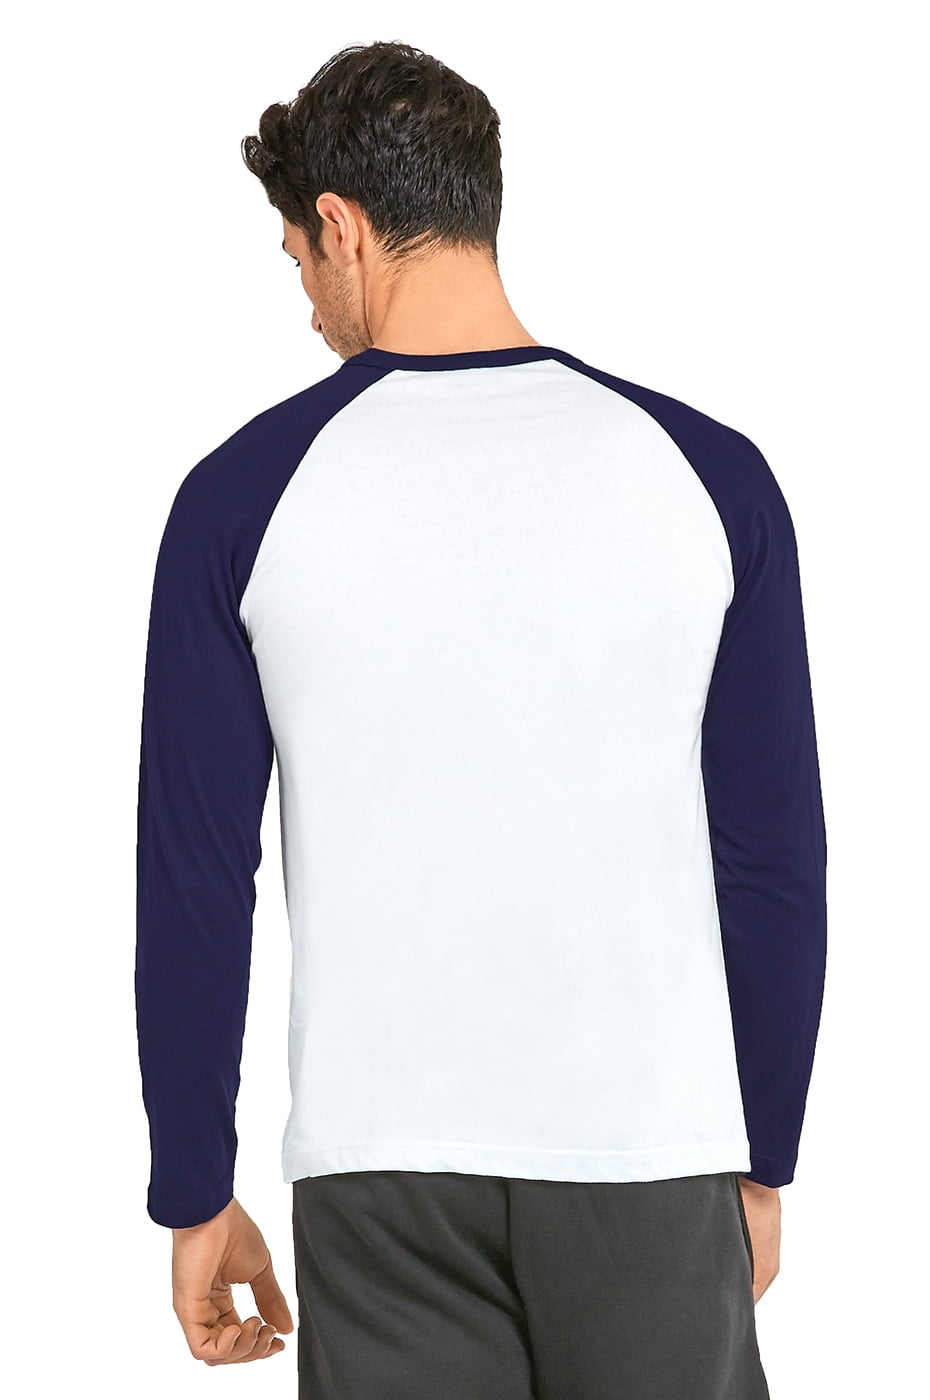 Men's Long Sleeve Baseball T-Shirt